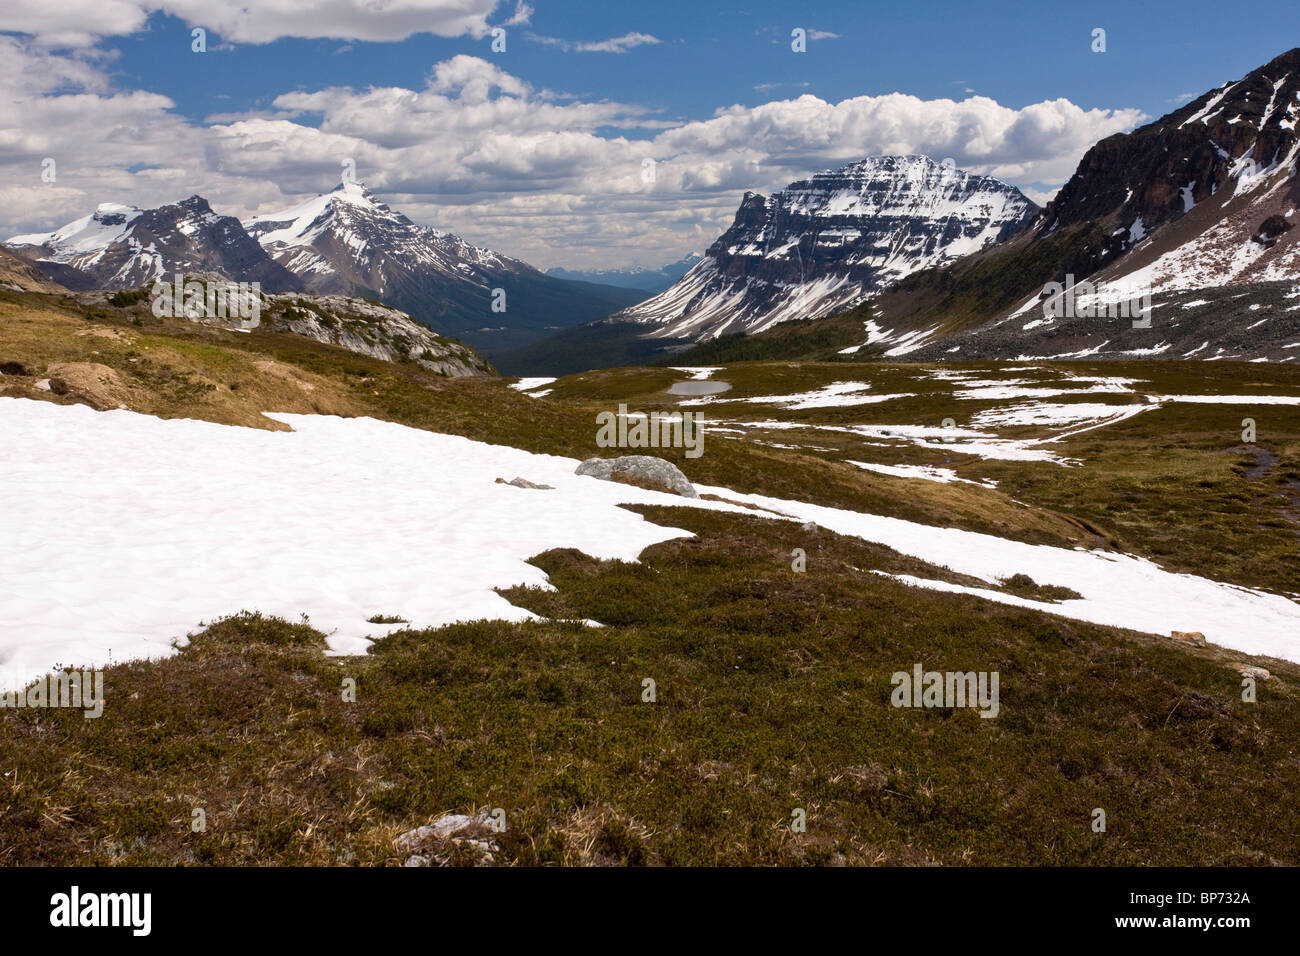 High tundra below Helen Lake, in the Banff National Park, Rockies, Canada Stock Photo